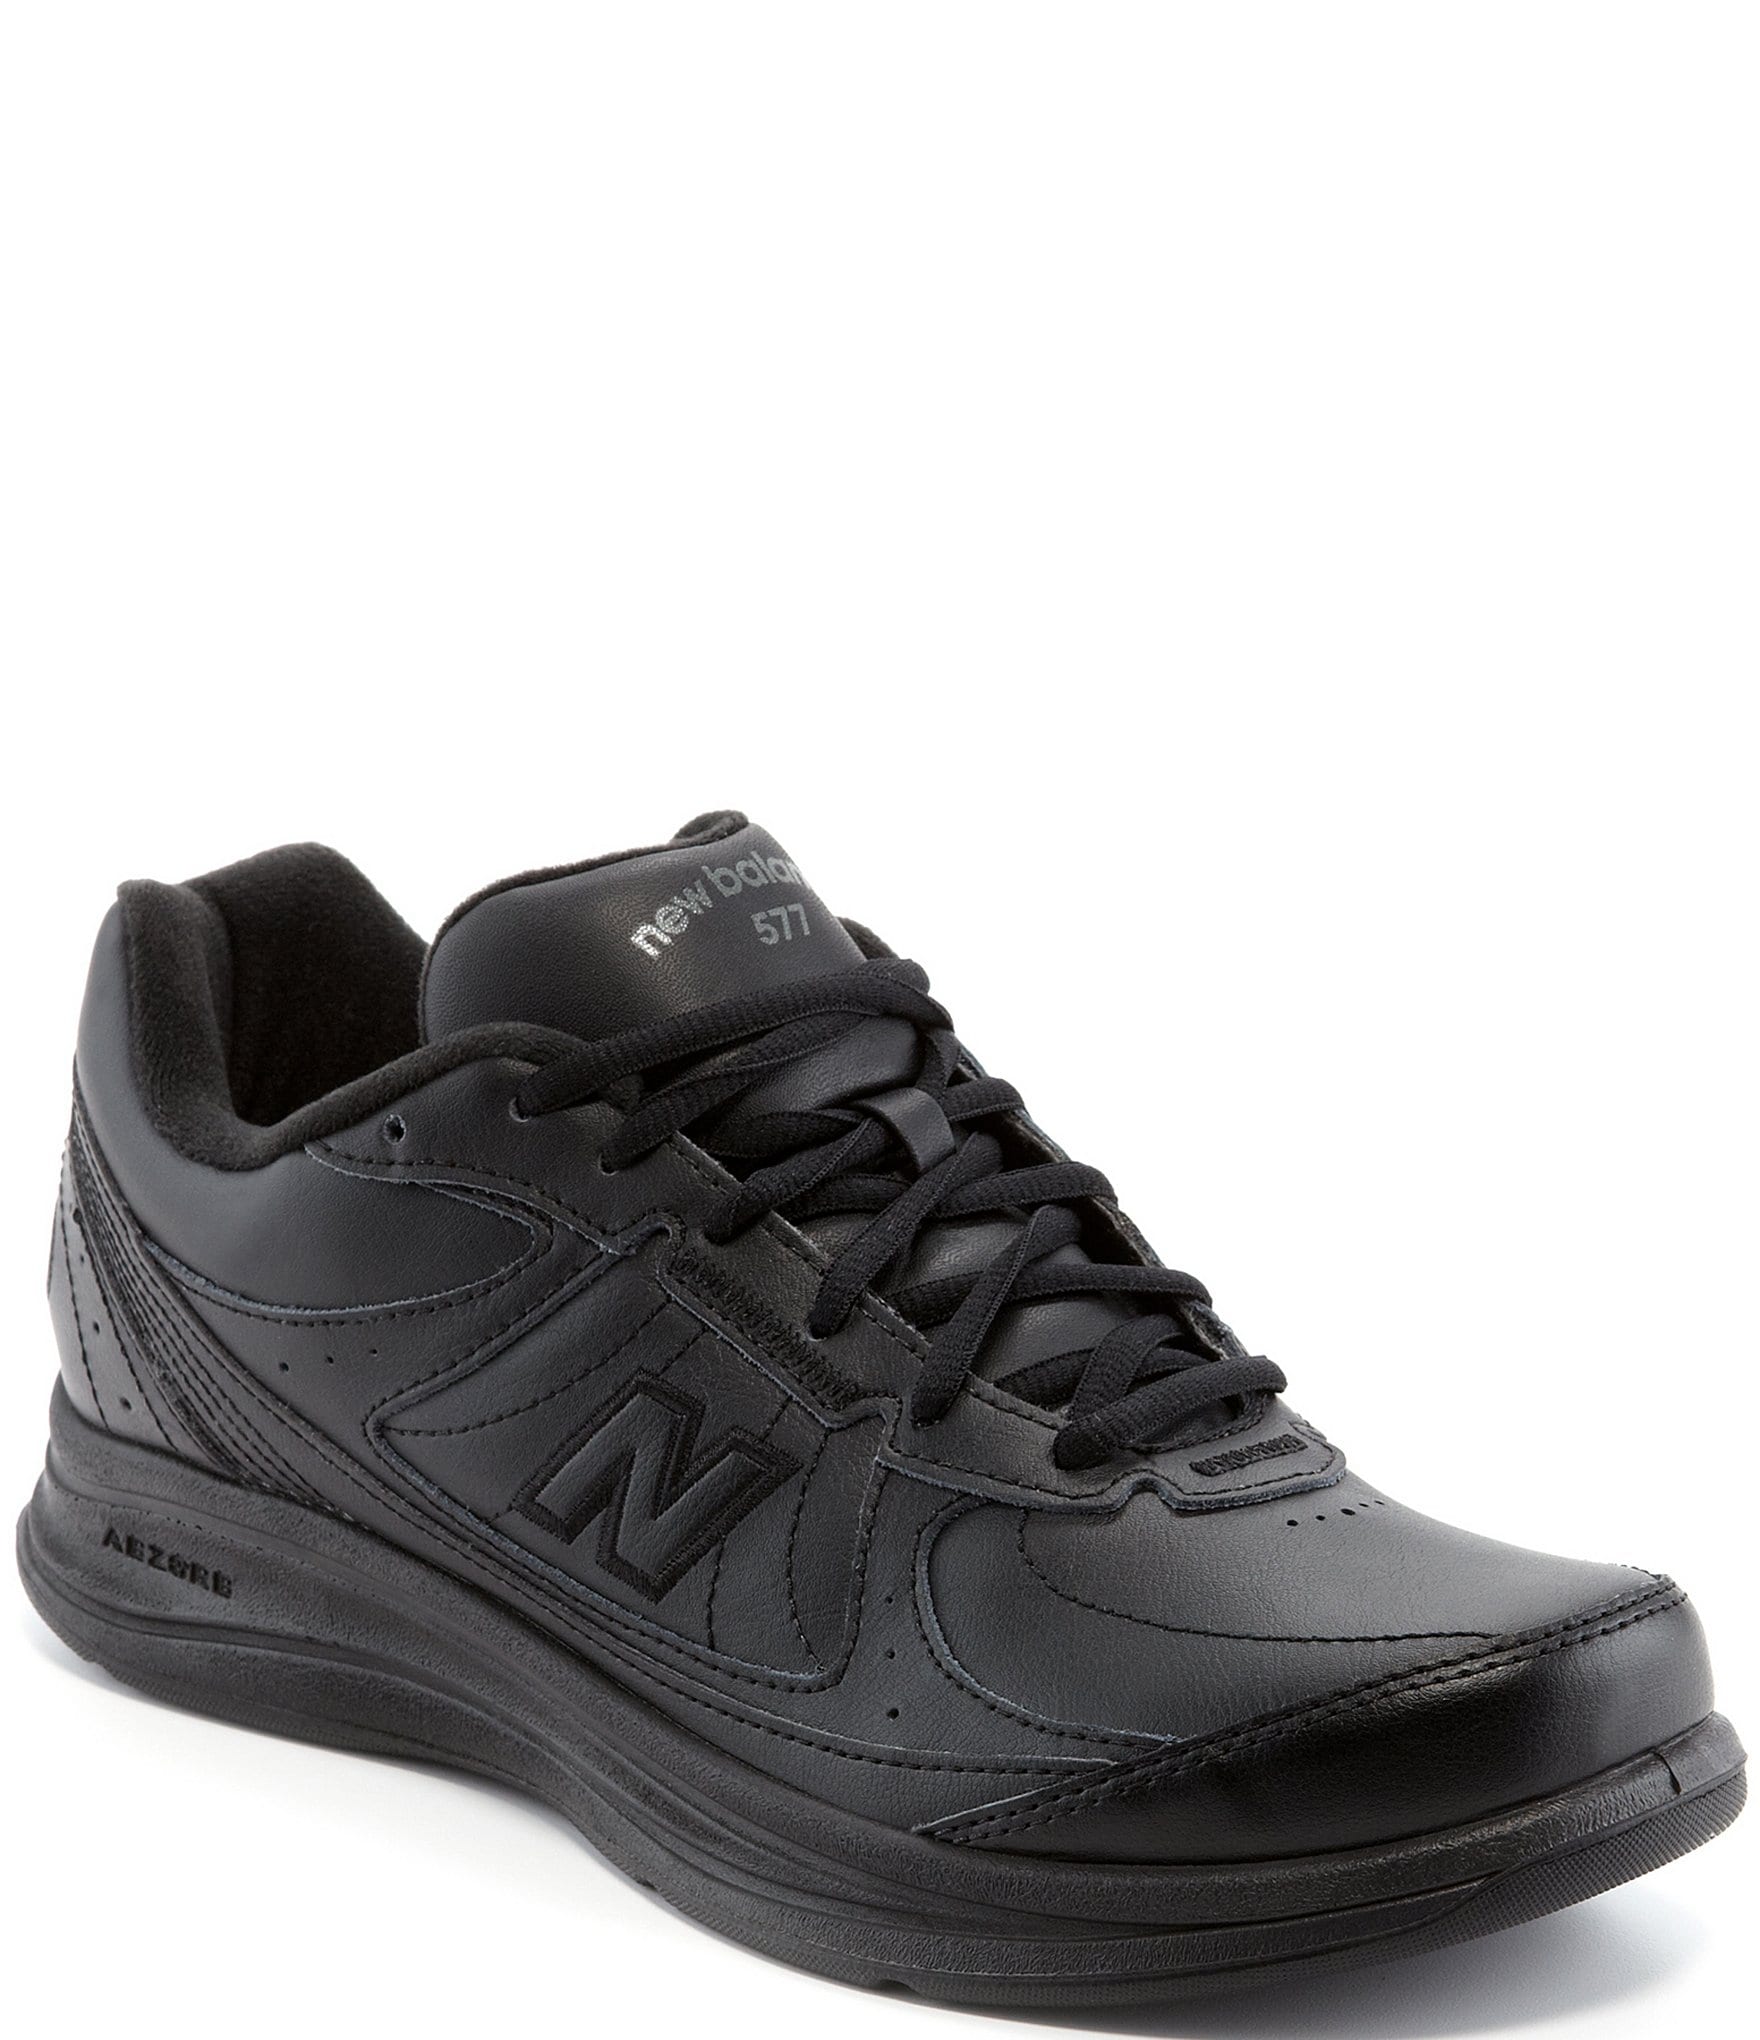 New Balance Men's 577 Walking Shoes 